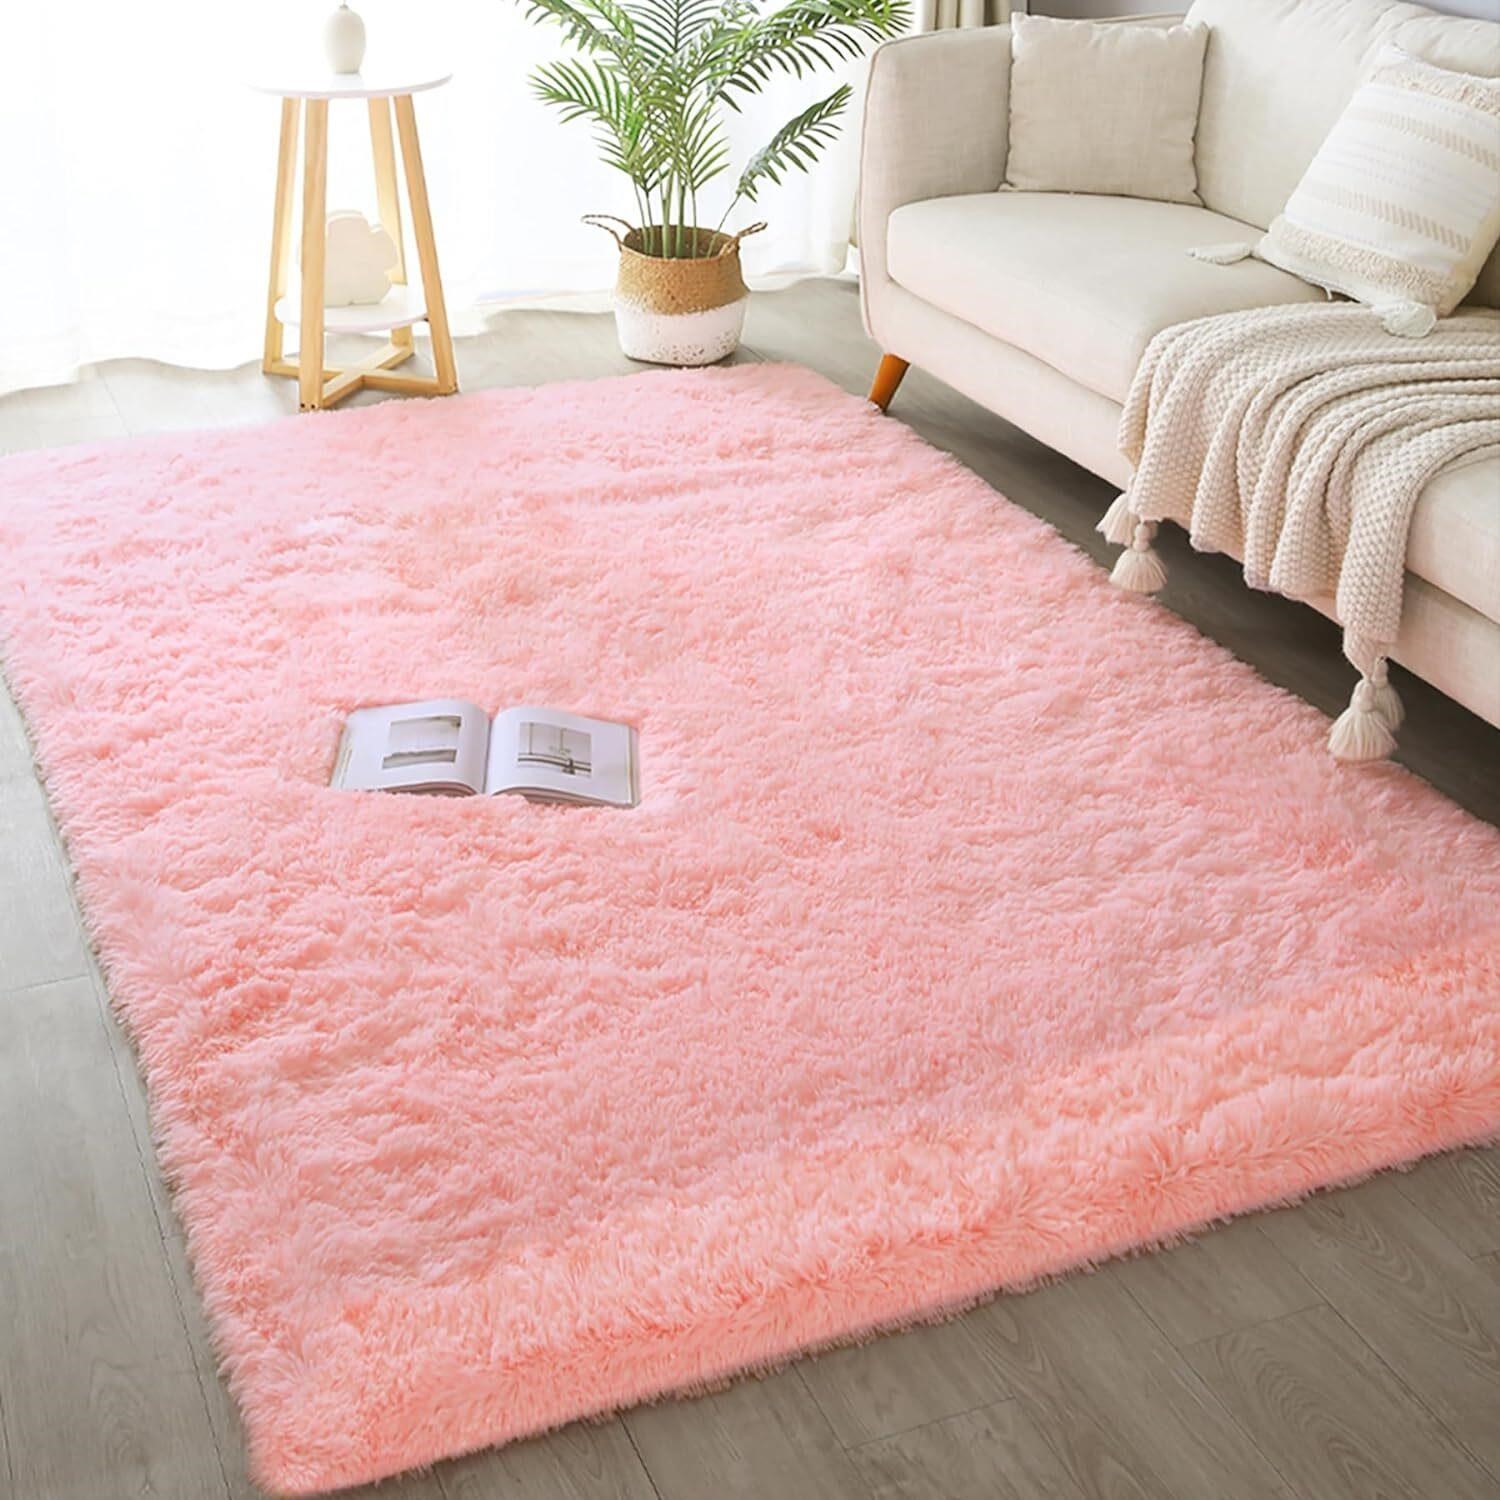 5x8 Pink Area Rug  Washable  Soft  Non-Slip